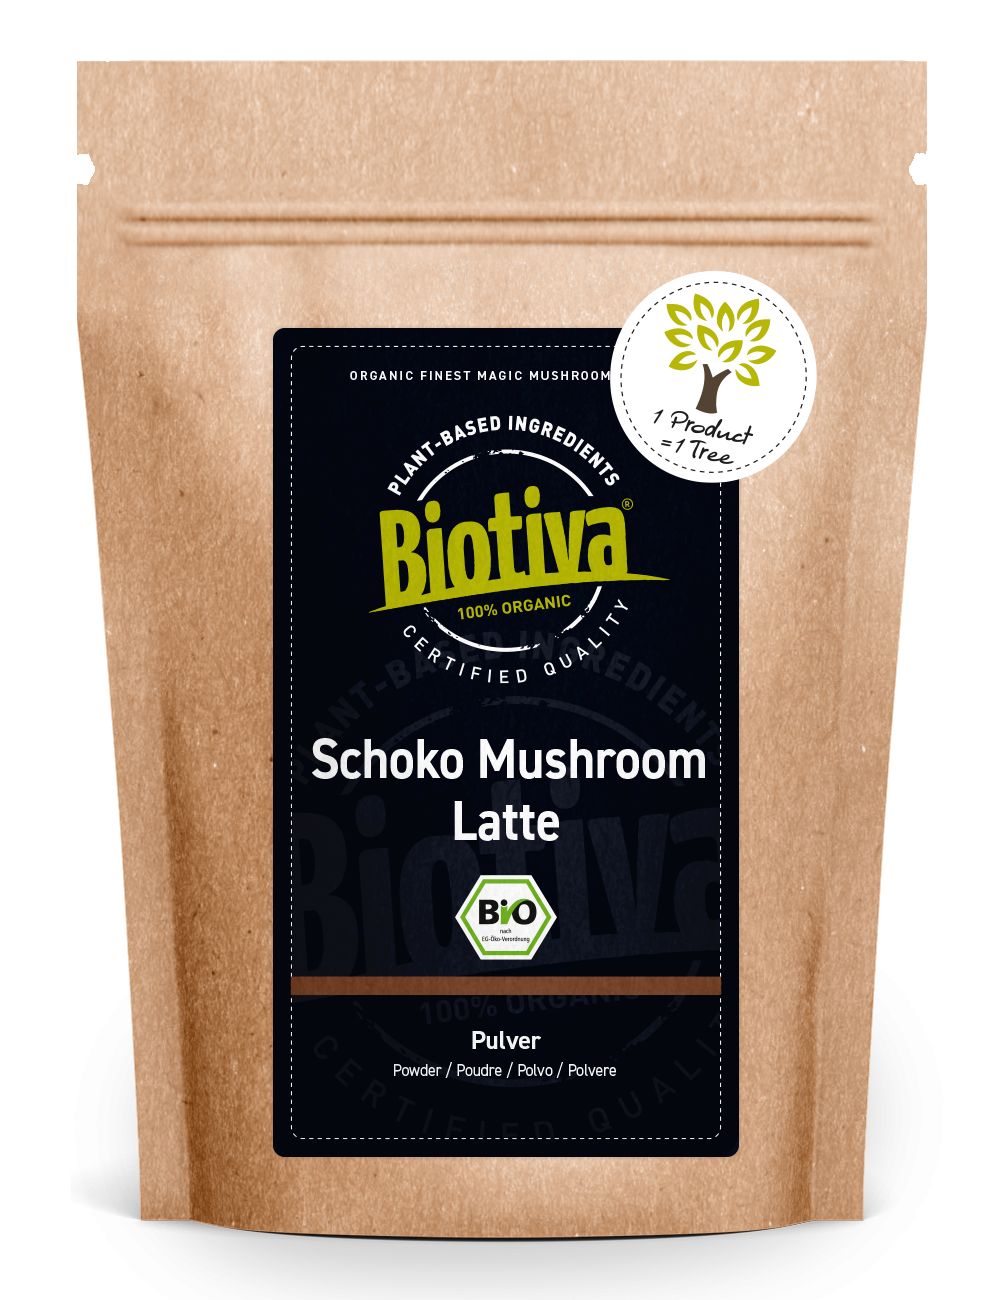 Biotiva Schoko Mushroom Latte Bio